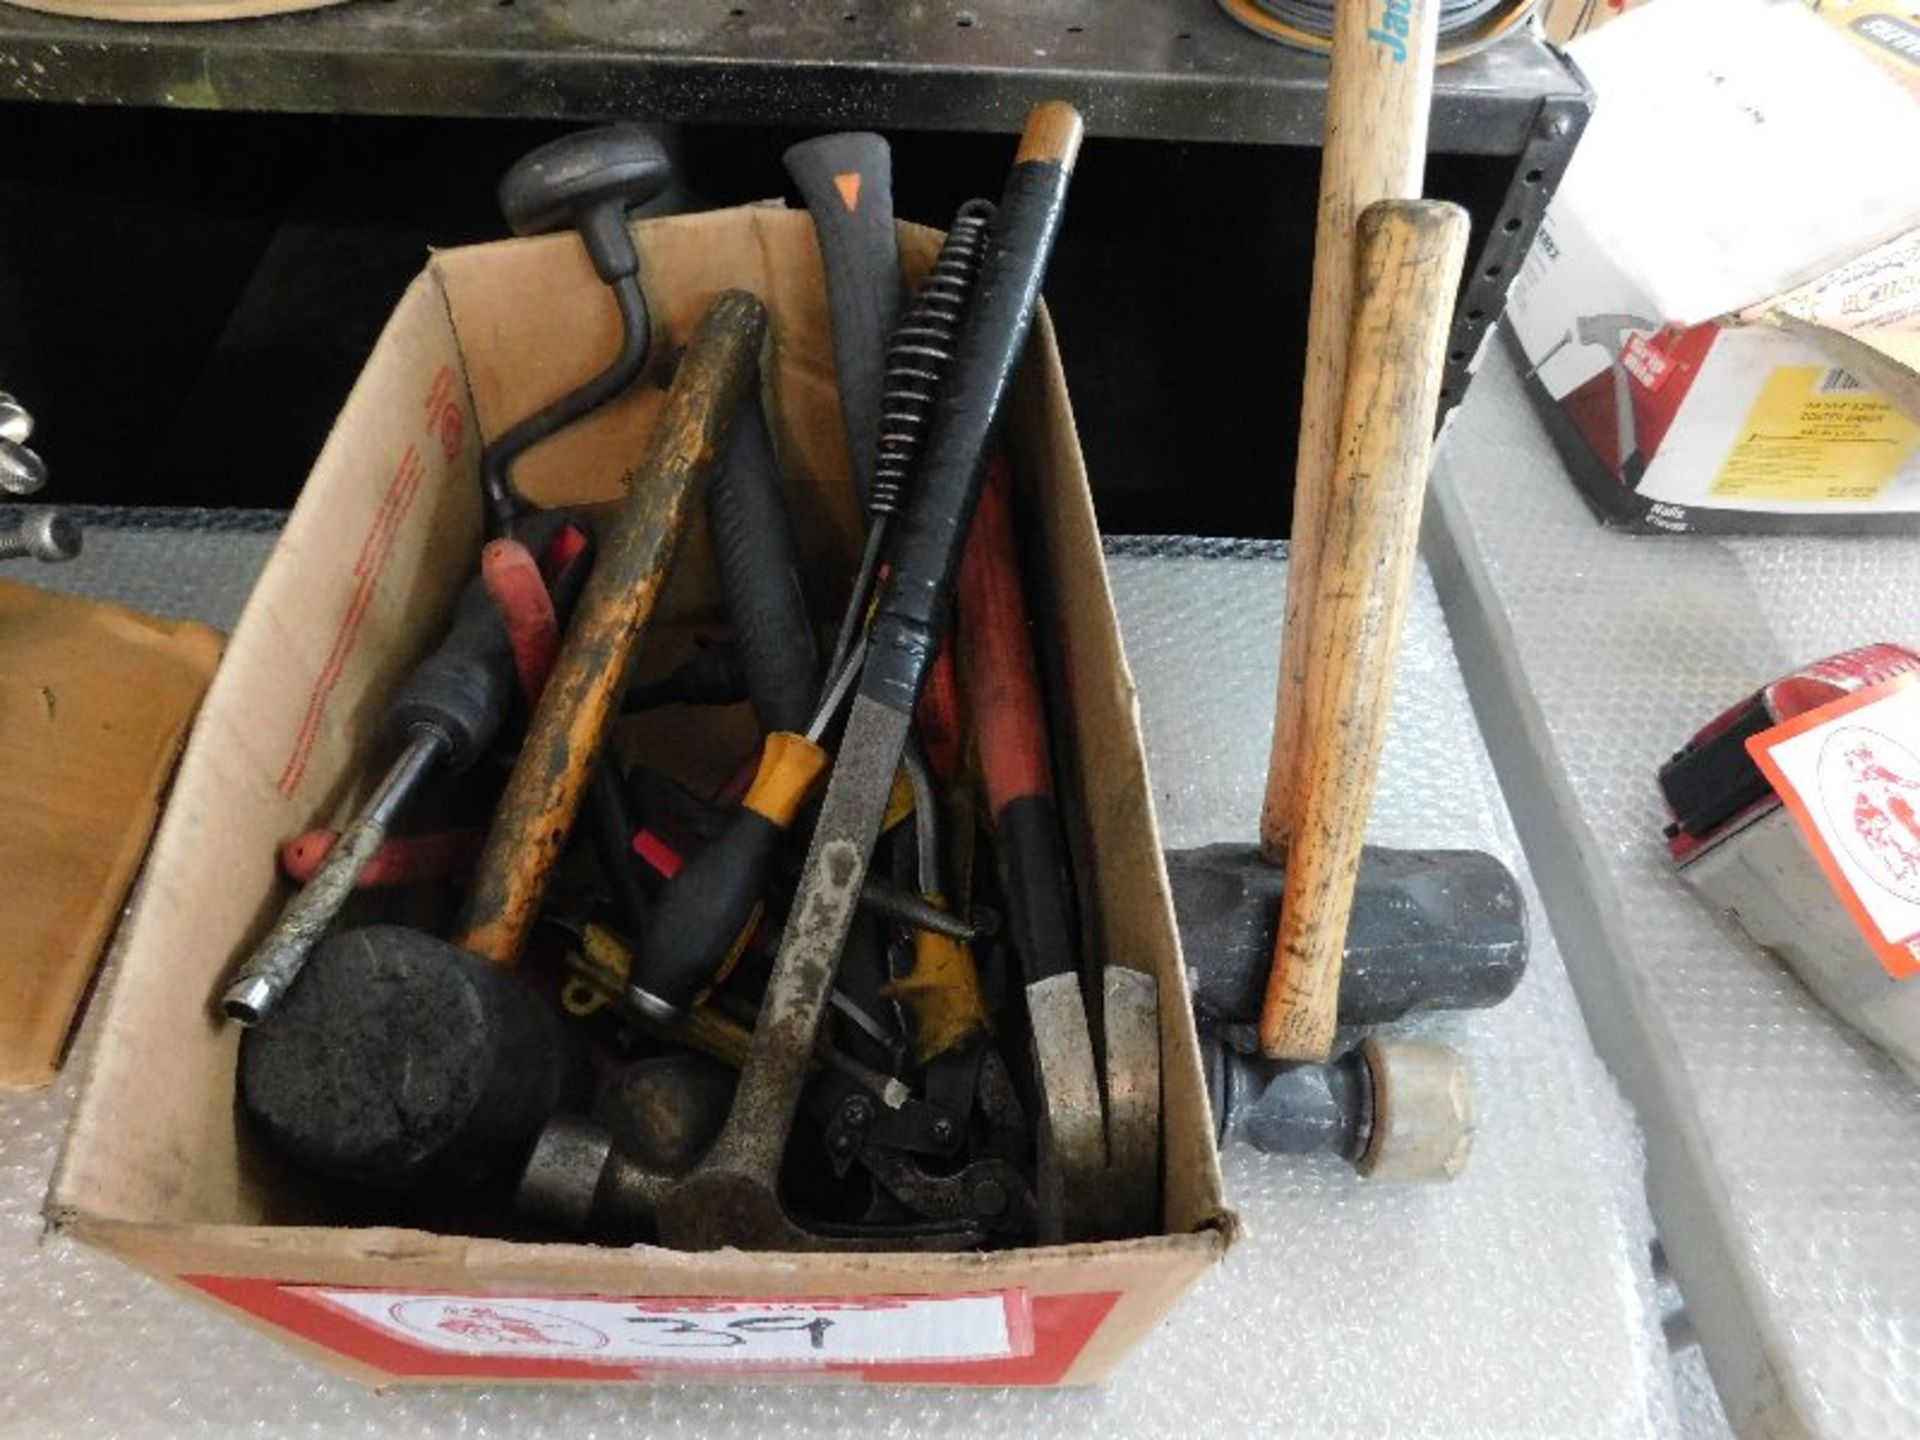 Contents Box, Misc. Hammers, Screwdrivers, Hand Tools, etc.